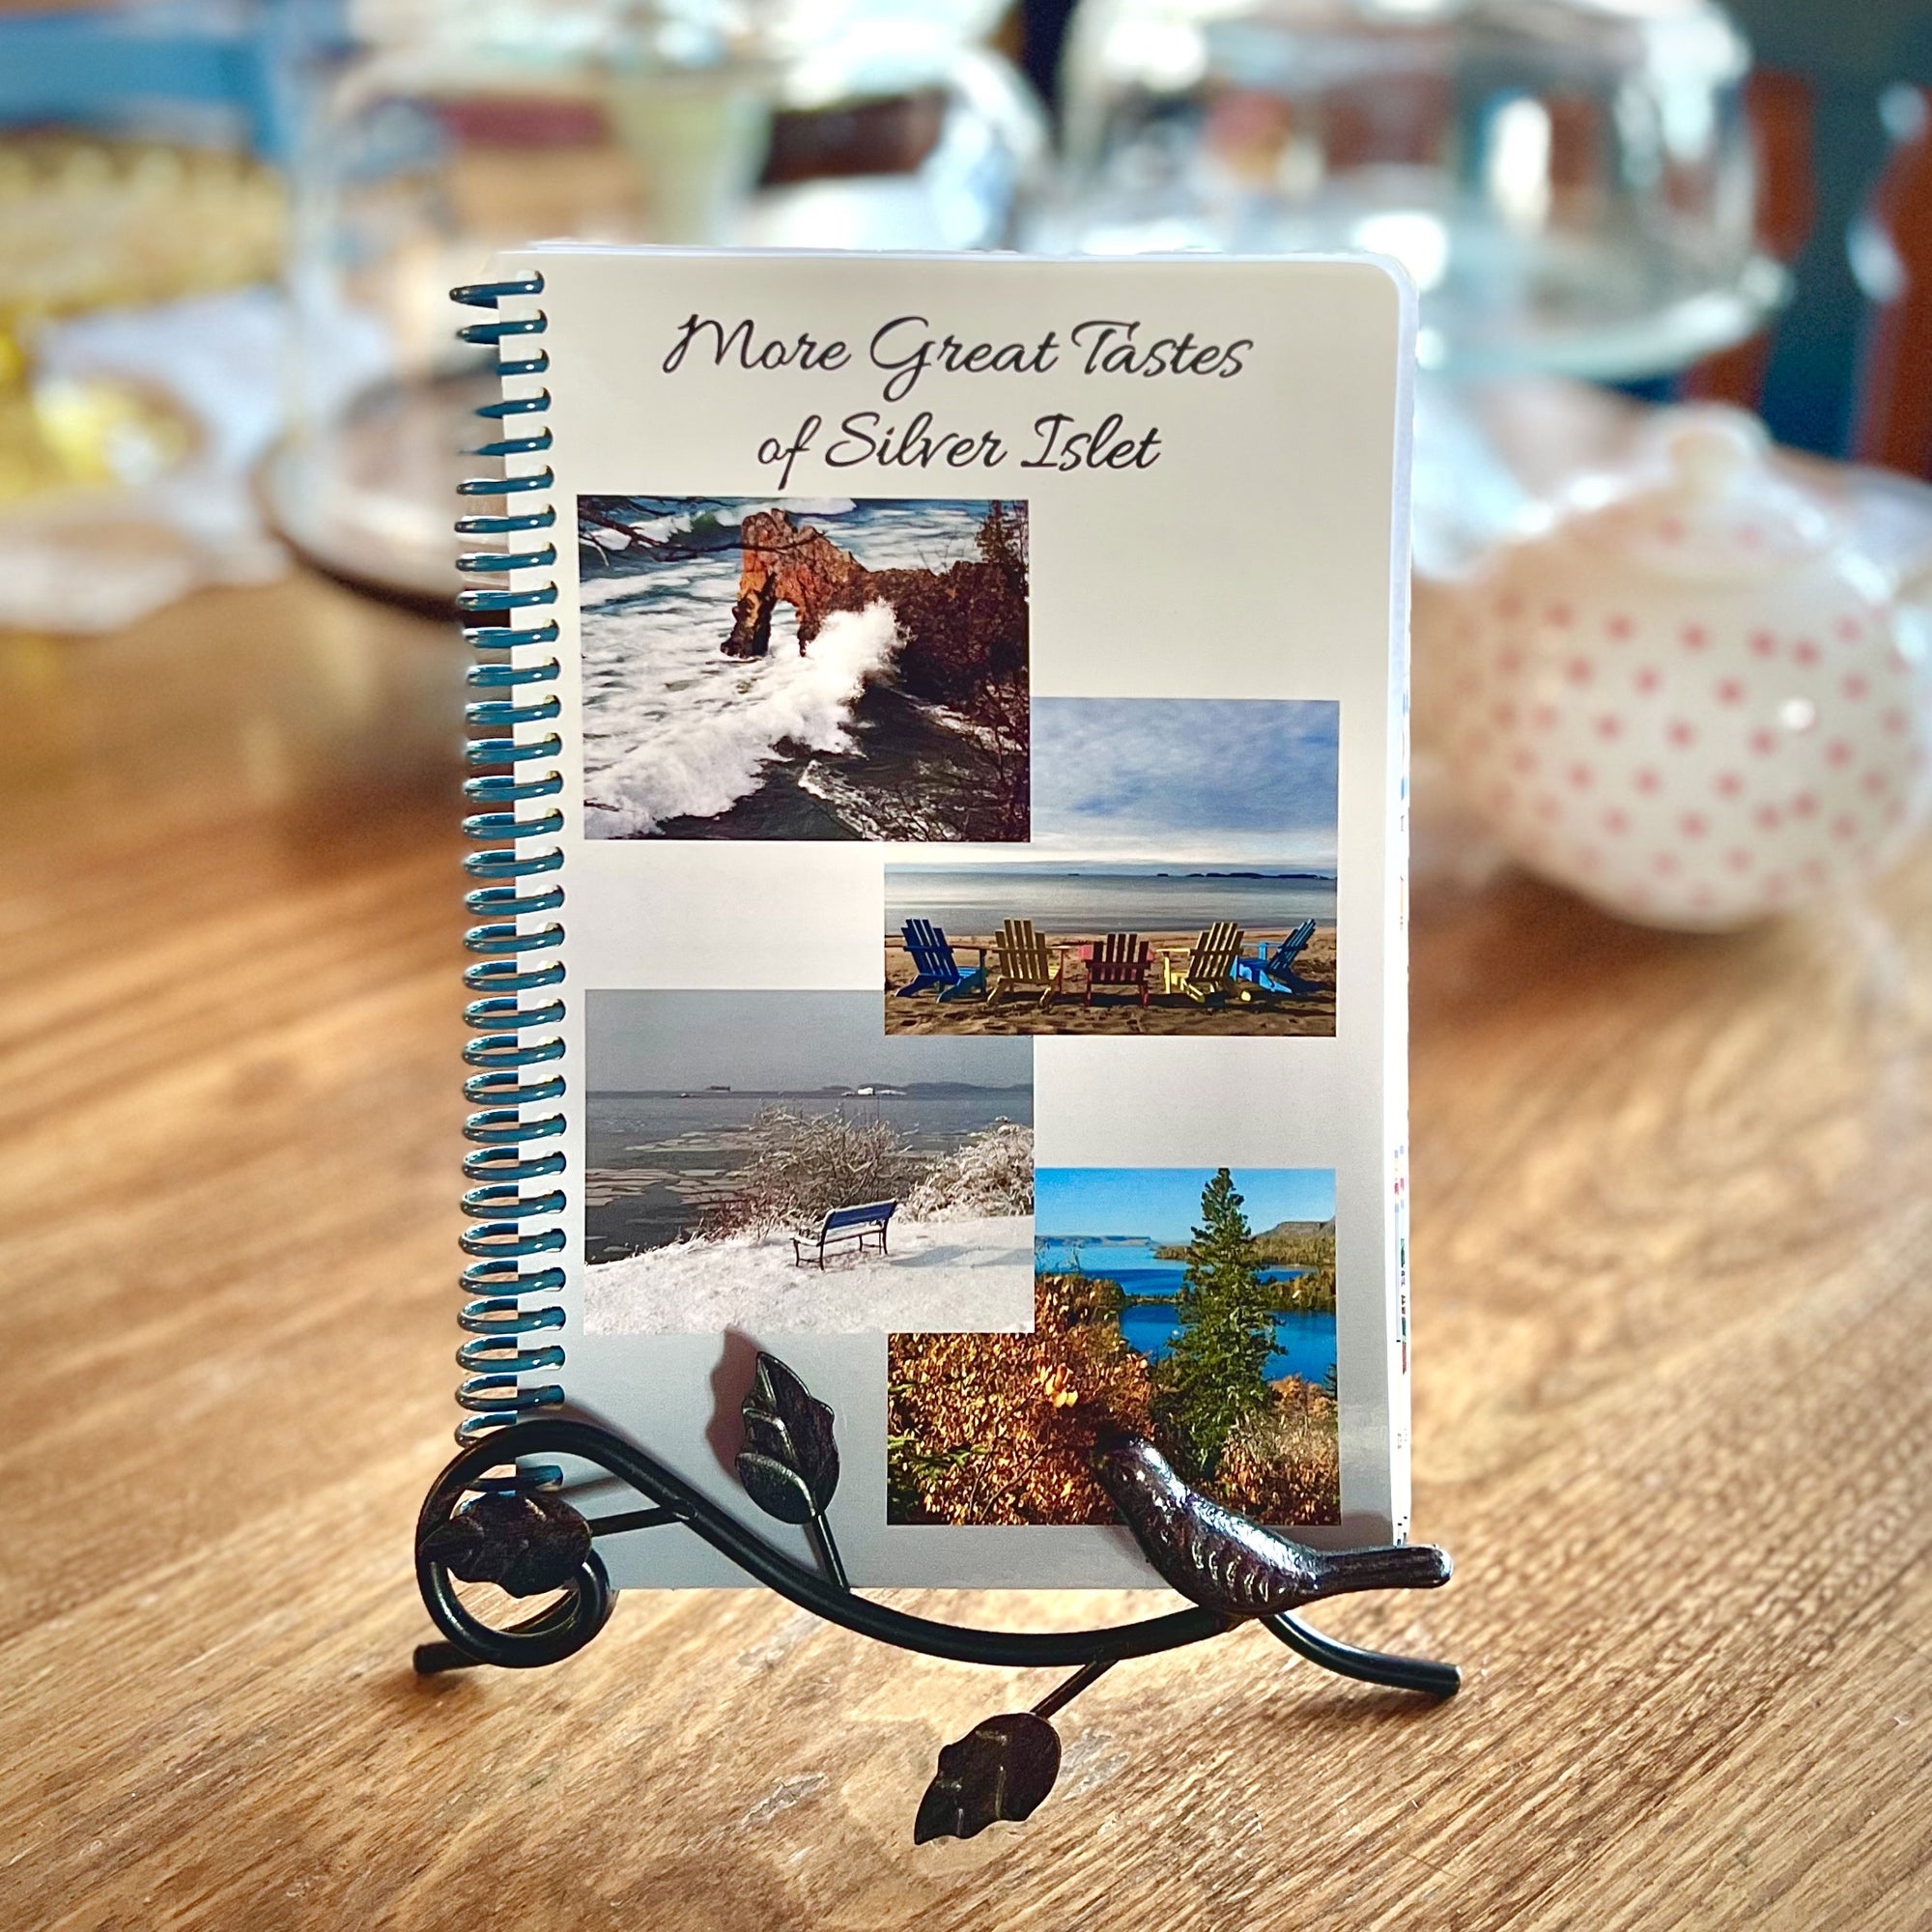 Silver Islet Campers Association Cookbook